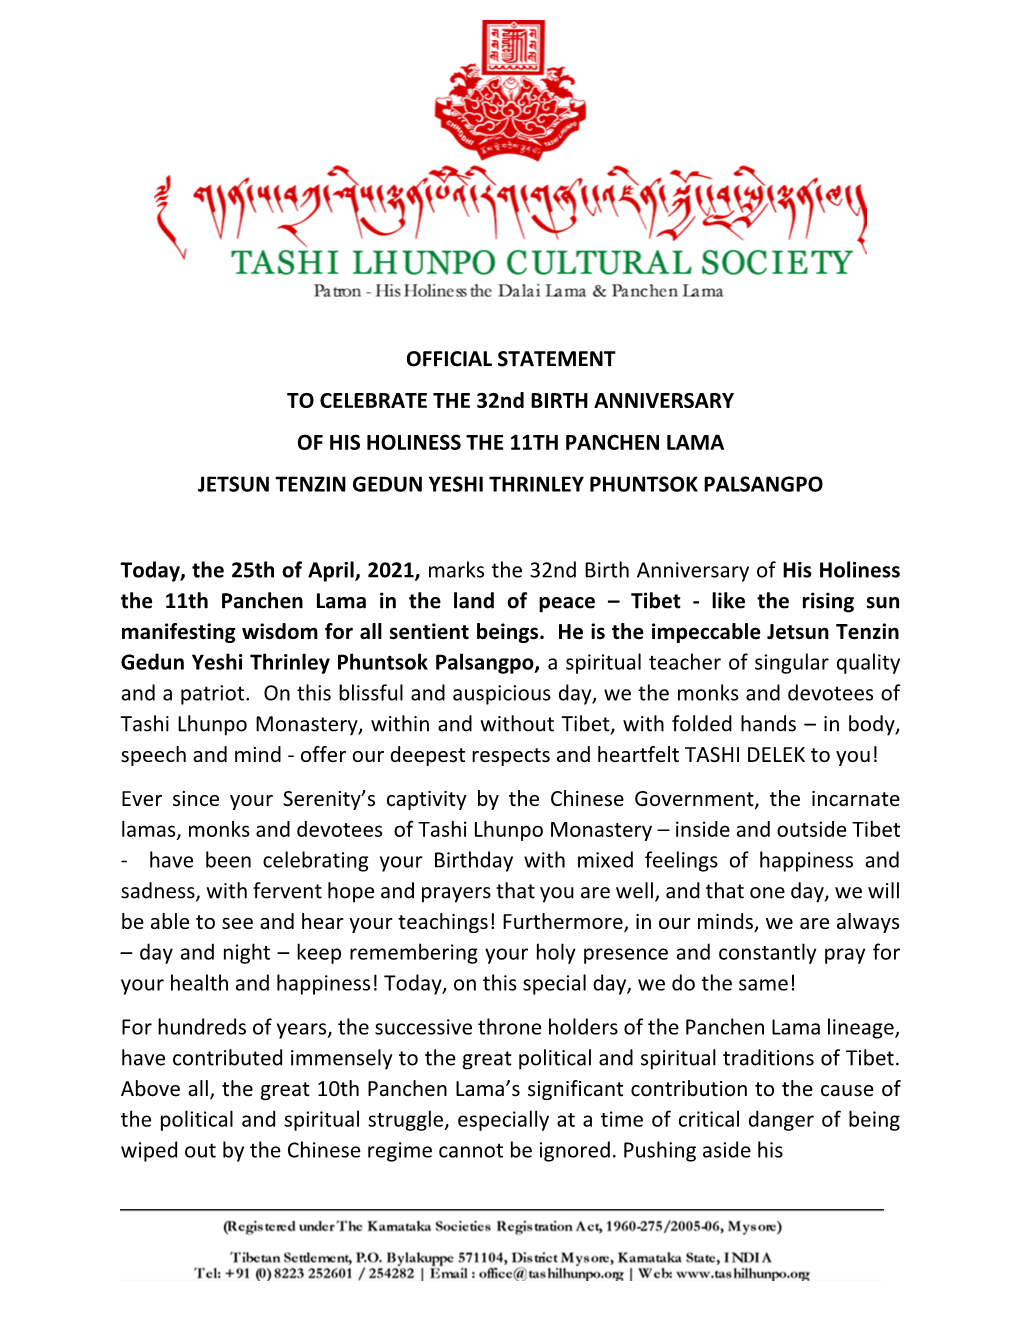 OFFICIAL STATEMENT to CELEBRATE the 32Nd BIRTH ANNIVERSARY of HIS HOLINESS the 11TH PANCHEN LAMA JETSUN TENZIN GEDUN YESHI THRINLEY PHUNTSOK PALSANGPO